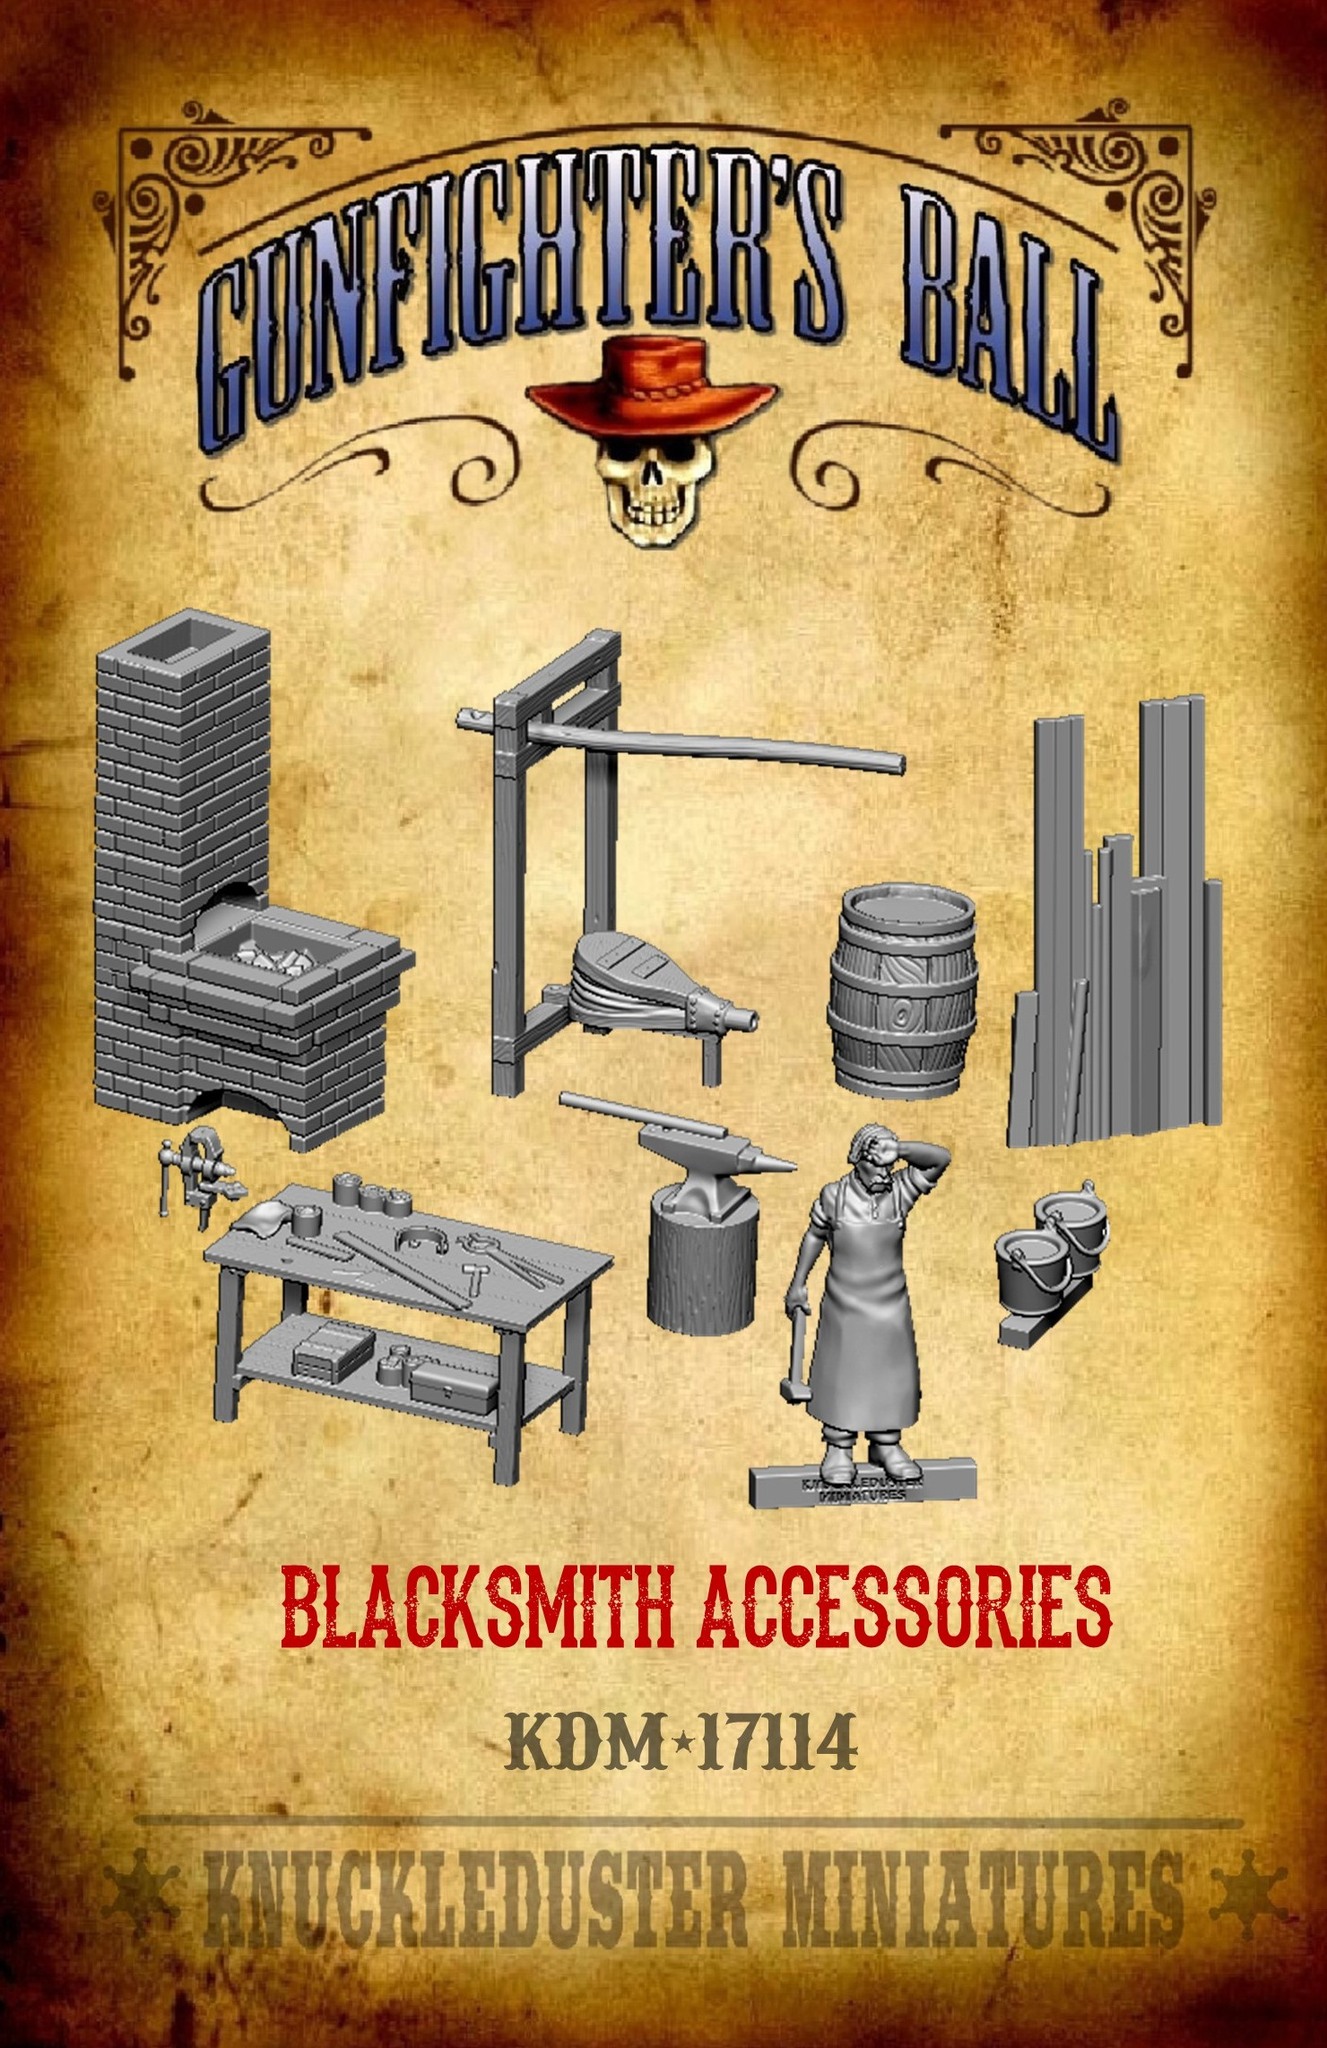 Blacksmith Accessories - Knuckleduster Miniatures